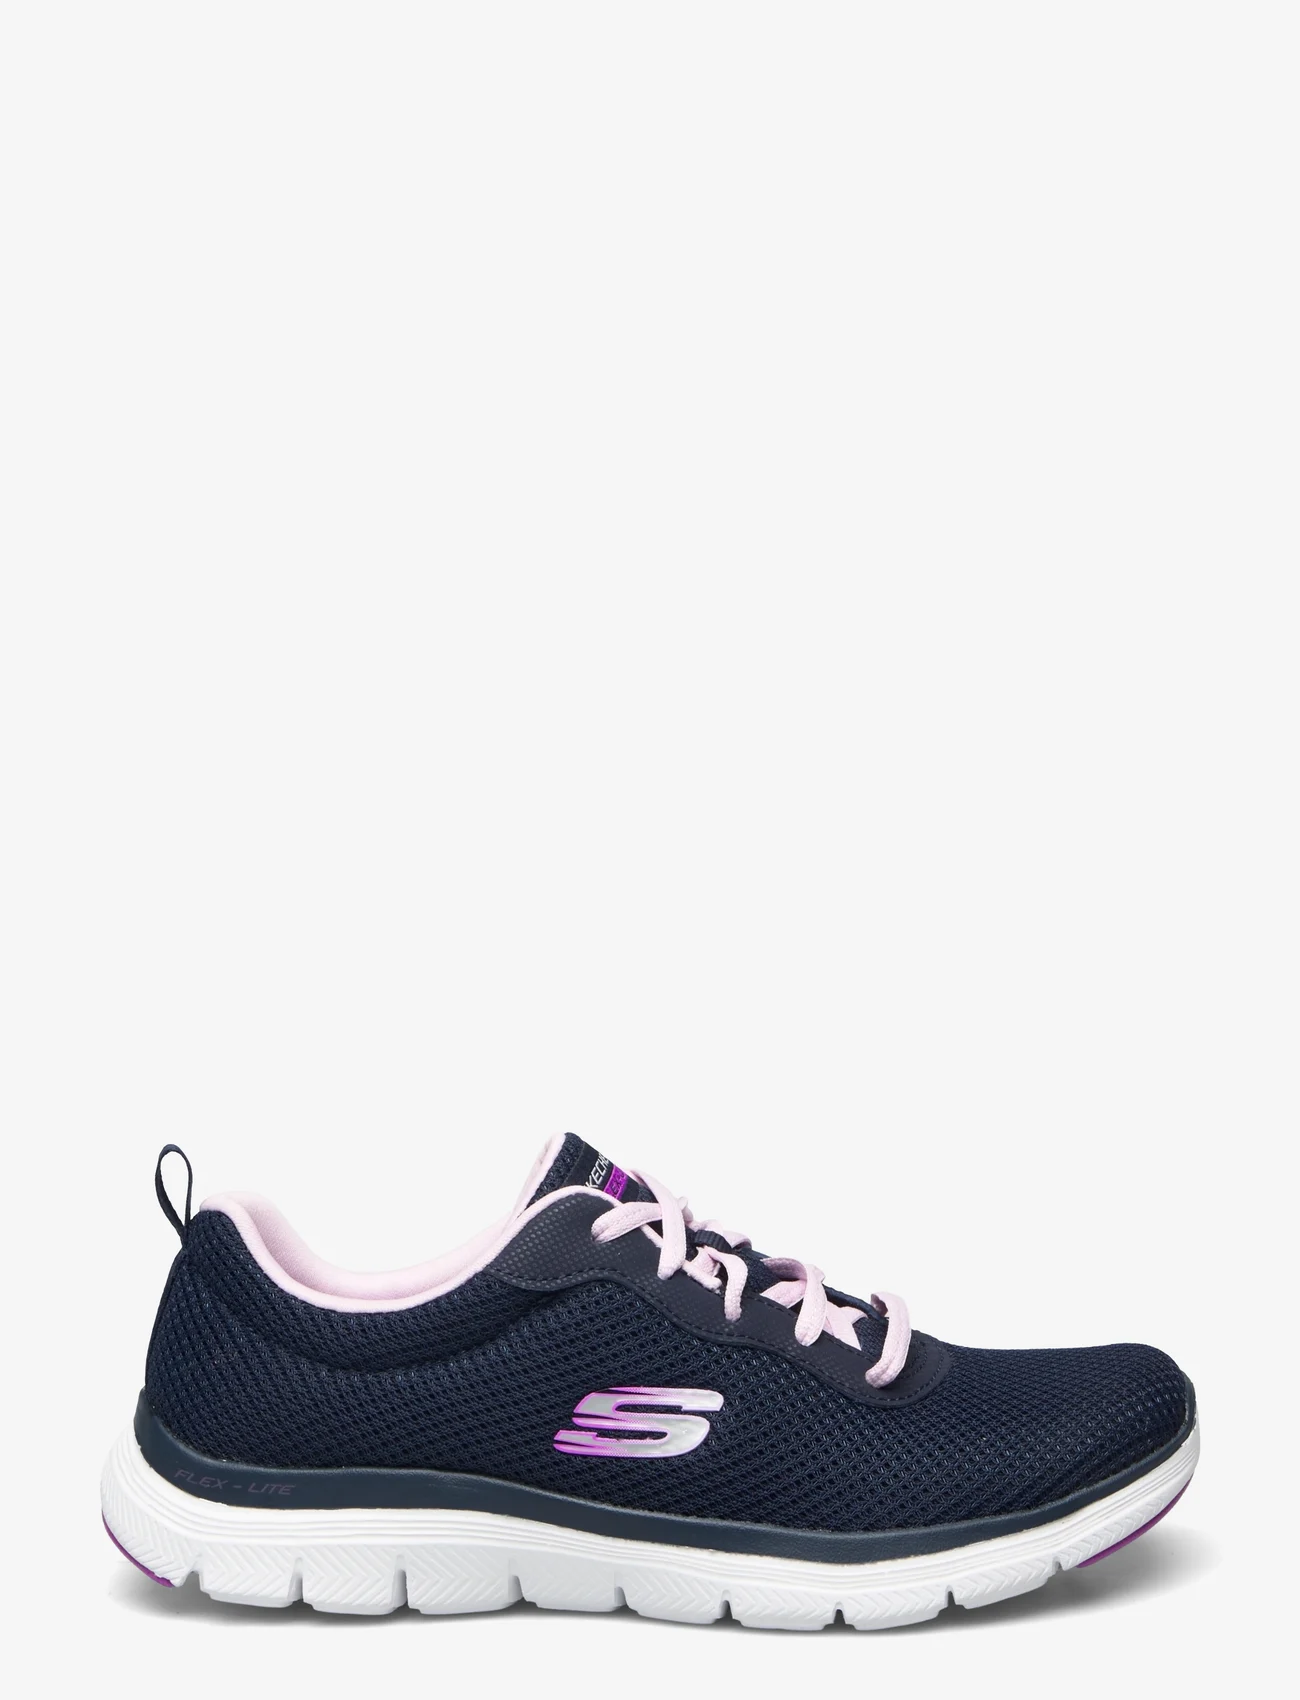 Skechers - Womens Flex Appeal 4.0 - Brilliant View - low top sneakers - nvlv navy lavender - 1